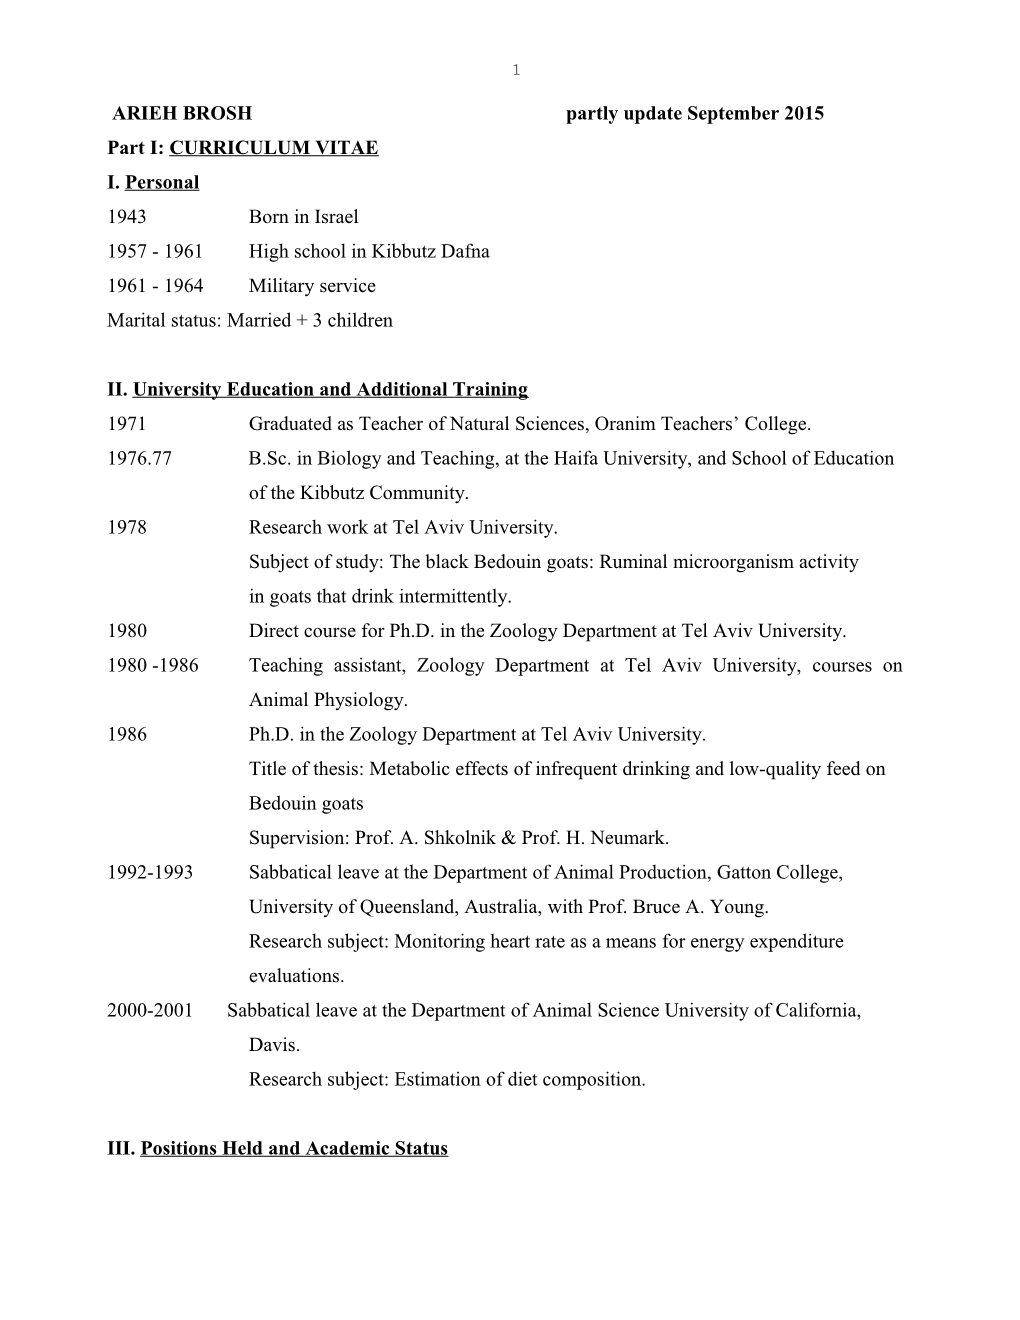 CV and List of Publication Arieh Brosh